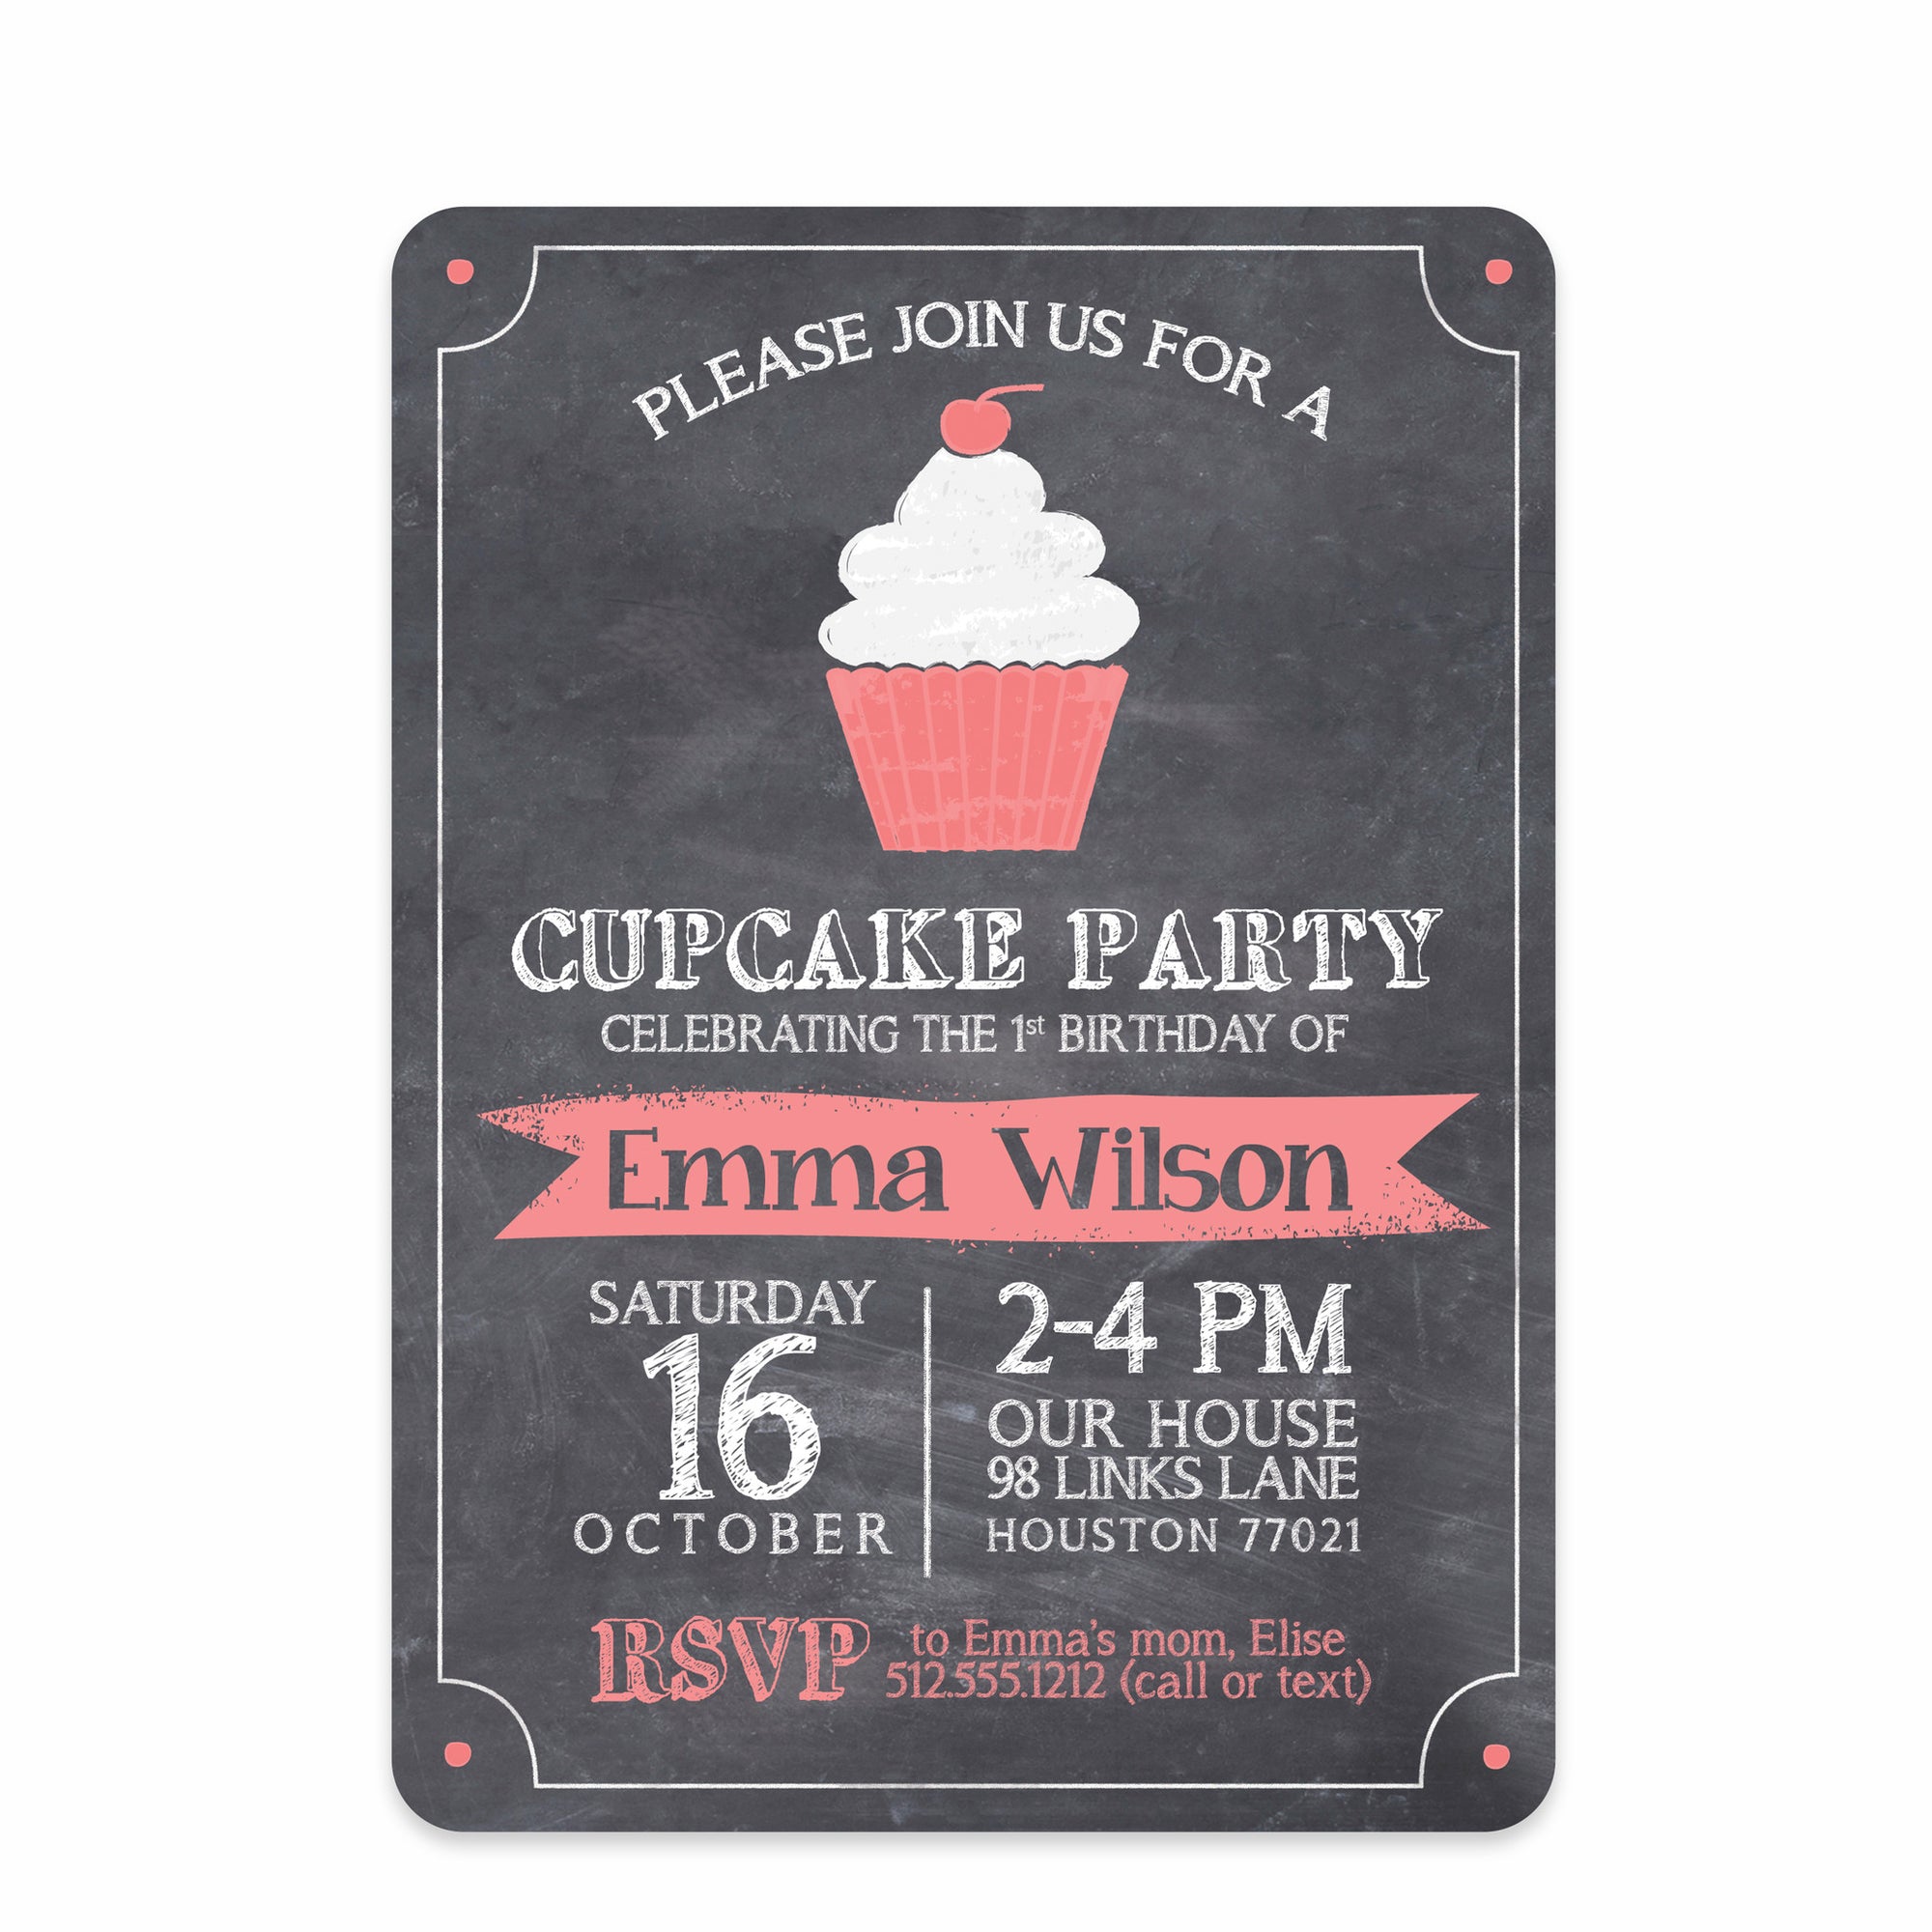 Cupcake Party Invitation | Pipsy.com | Pink